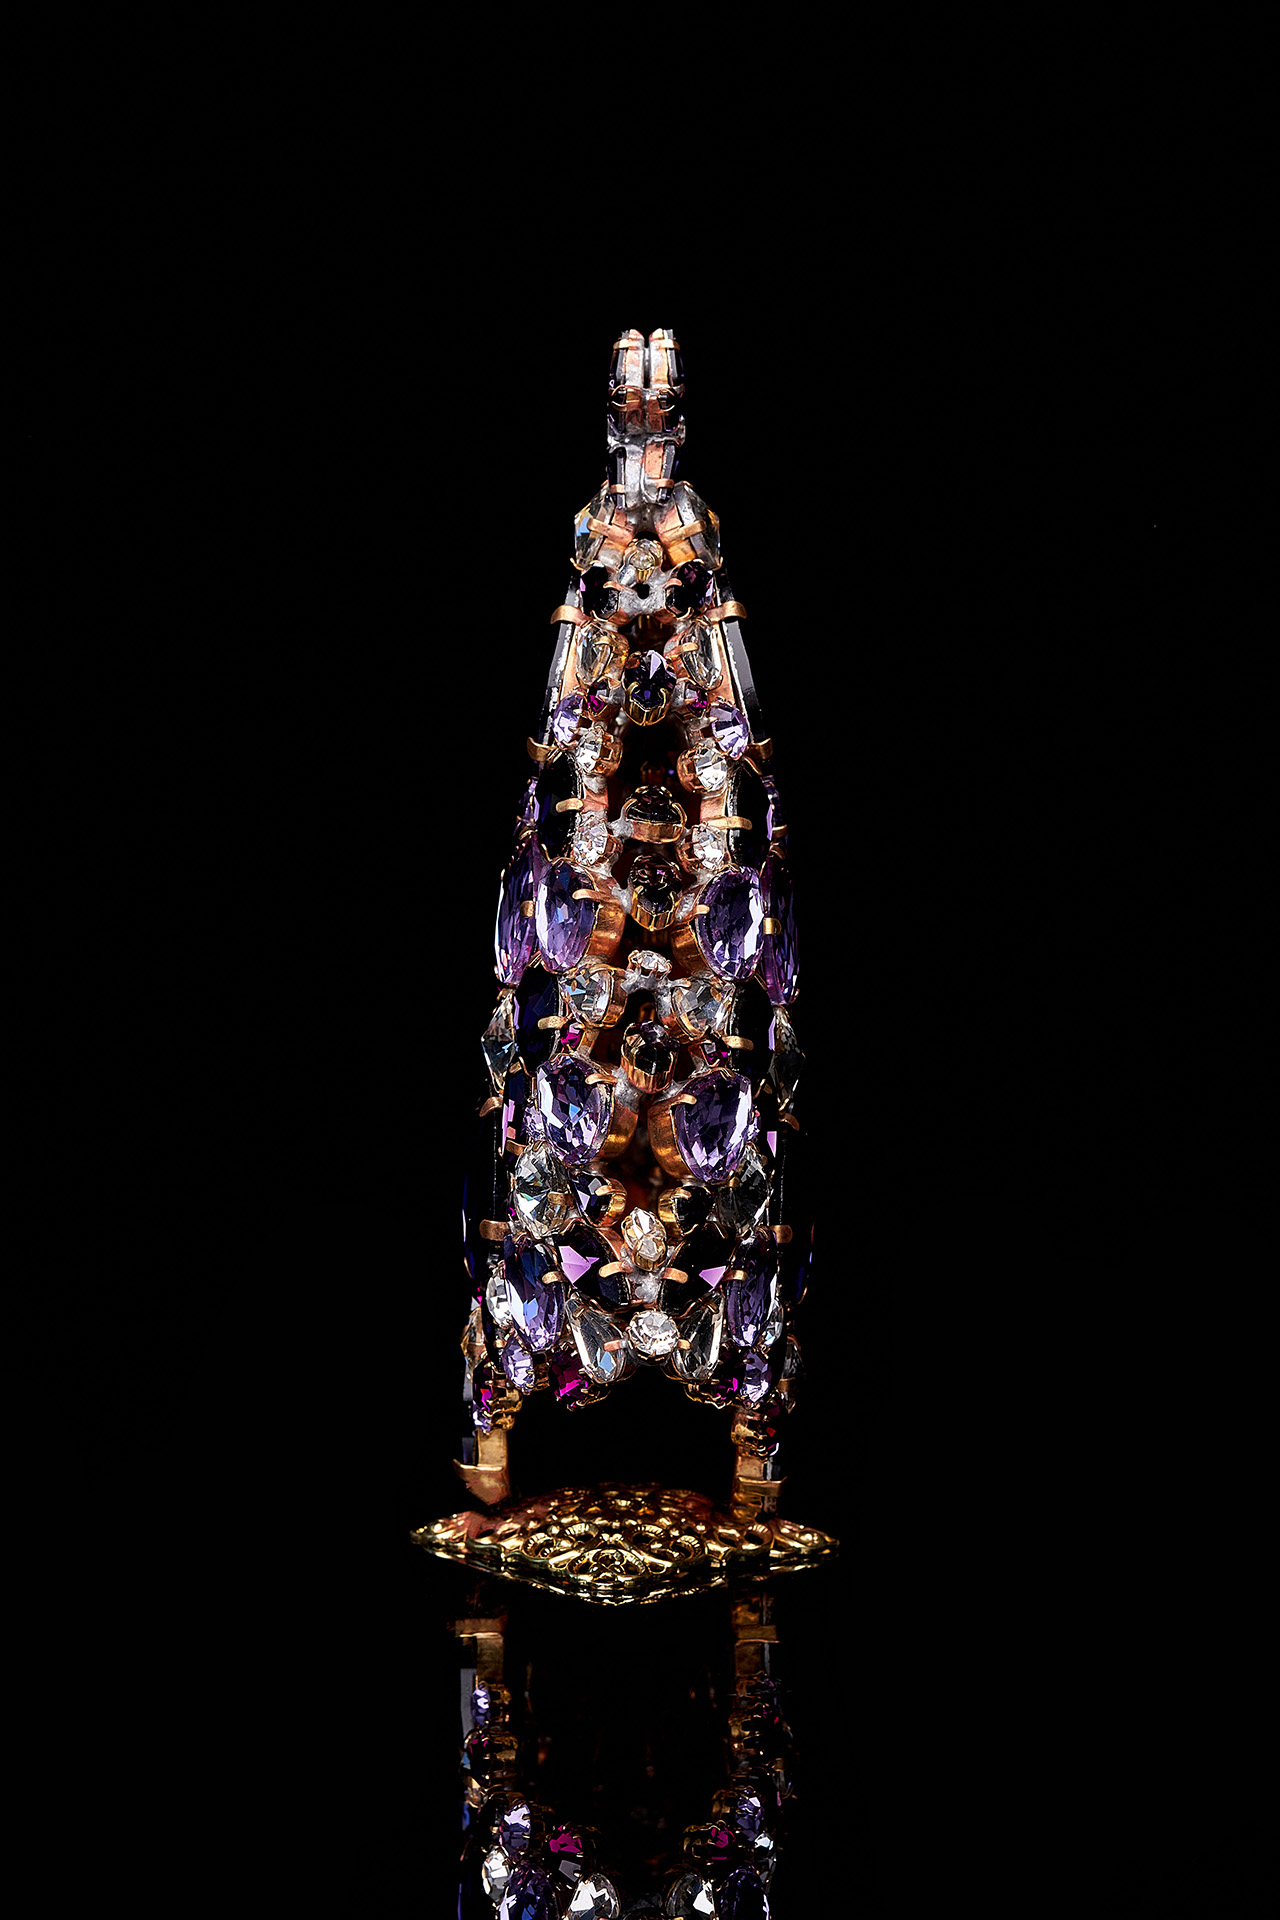 Czech handmade magical 3D Christmas tree from purple rhinestones